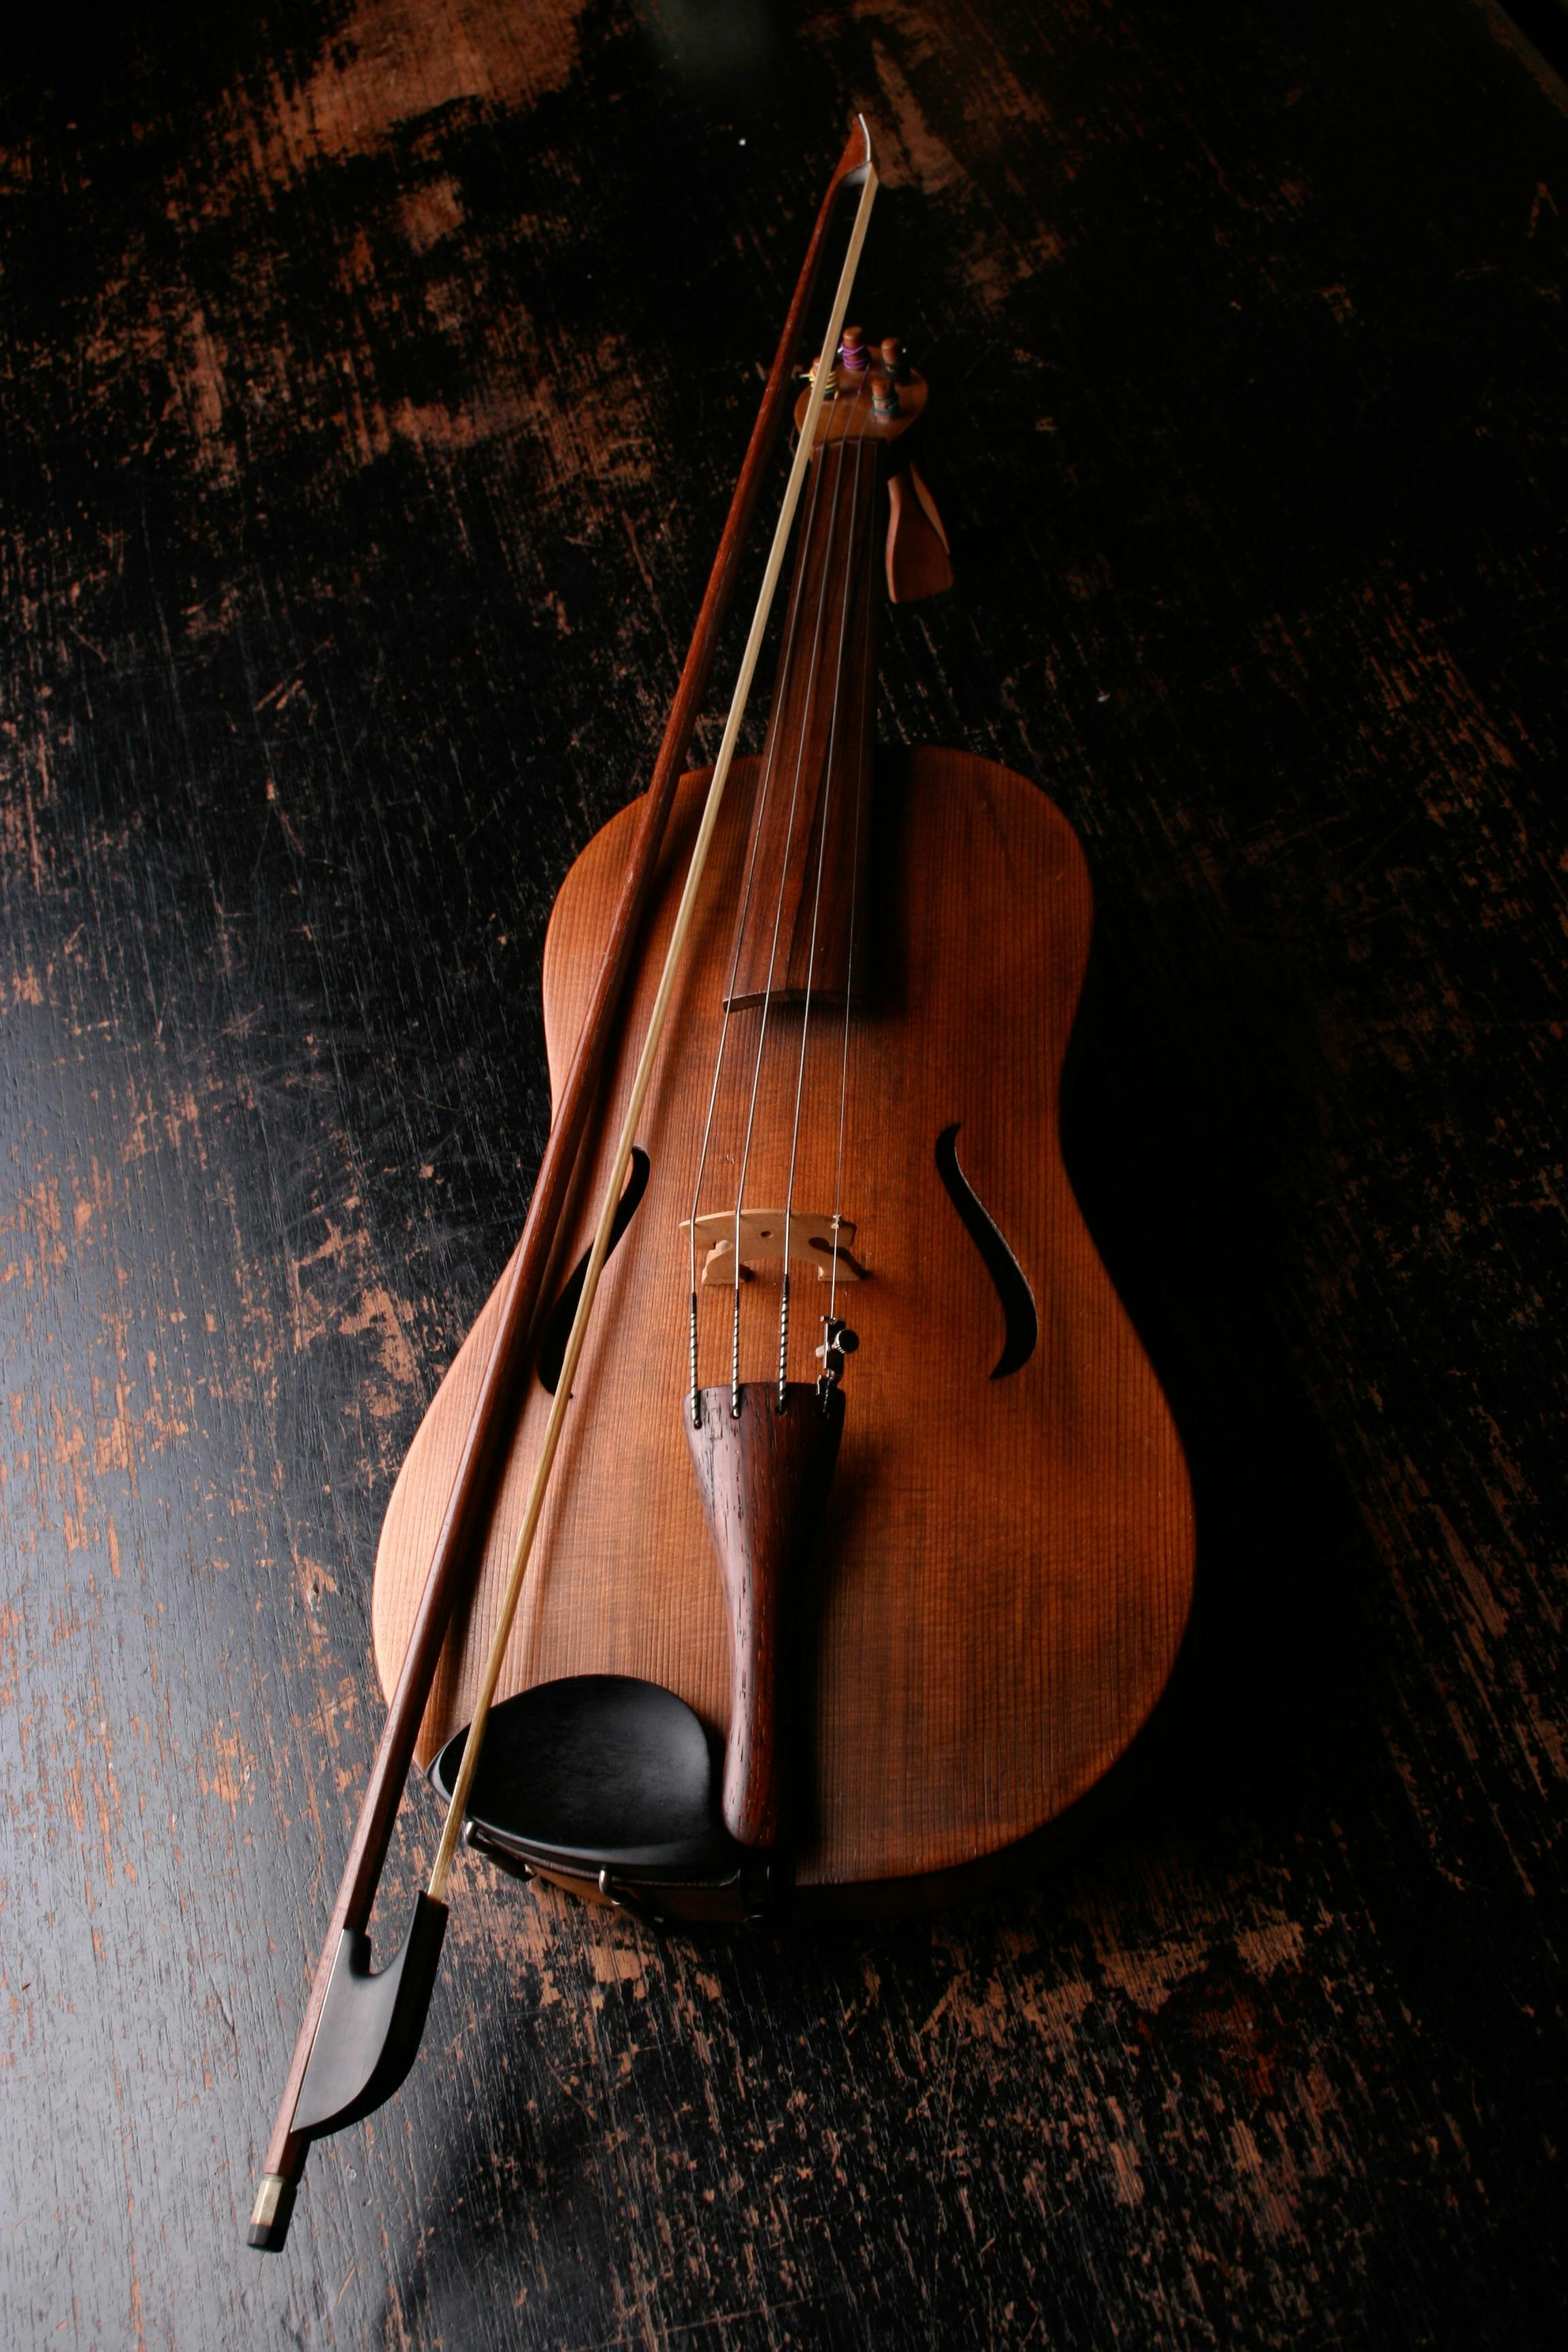 violin-musical-instrument-music-sound.jpg?cs=srgb&dl=pexels-pixabay-34221.jpg&fm=jpg